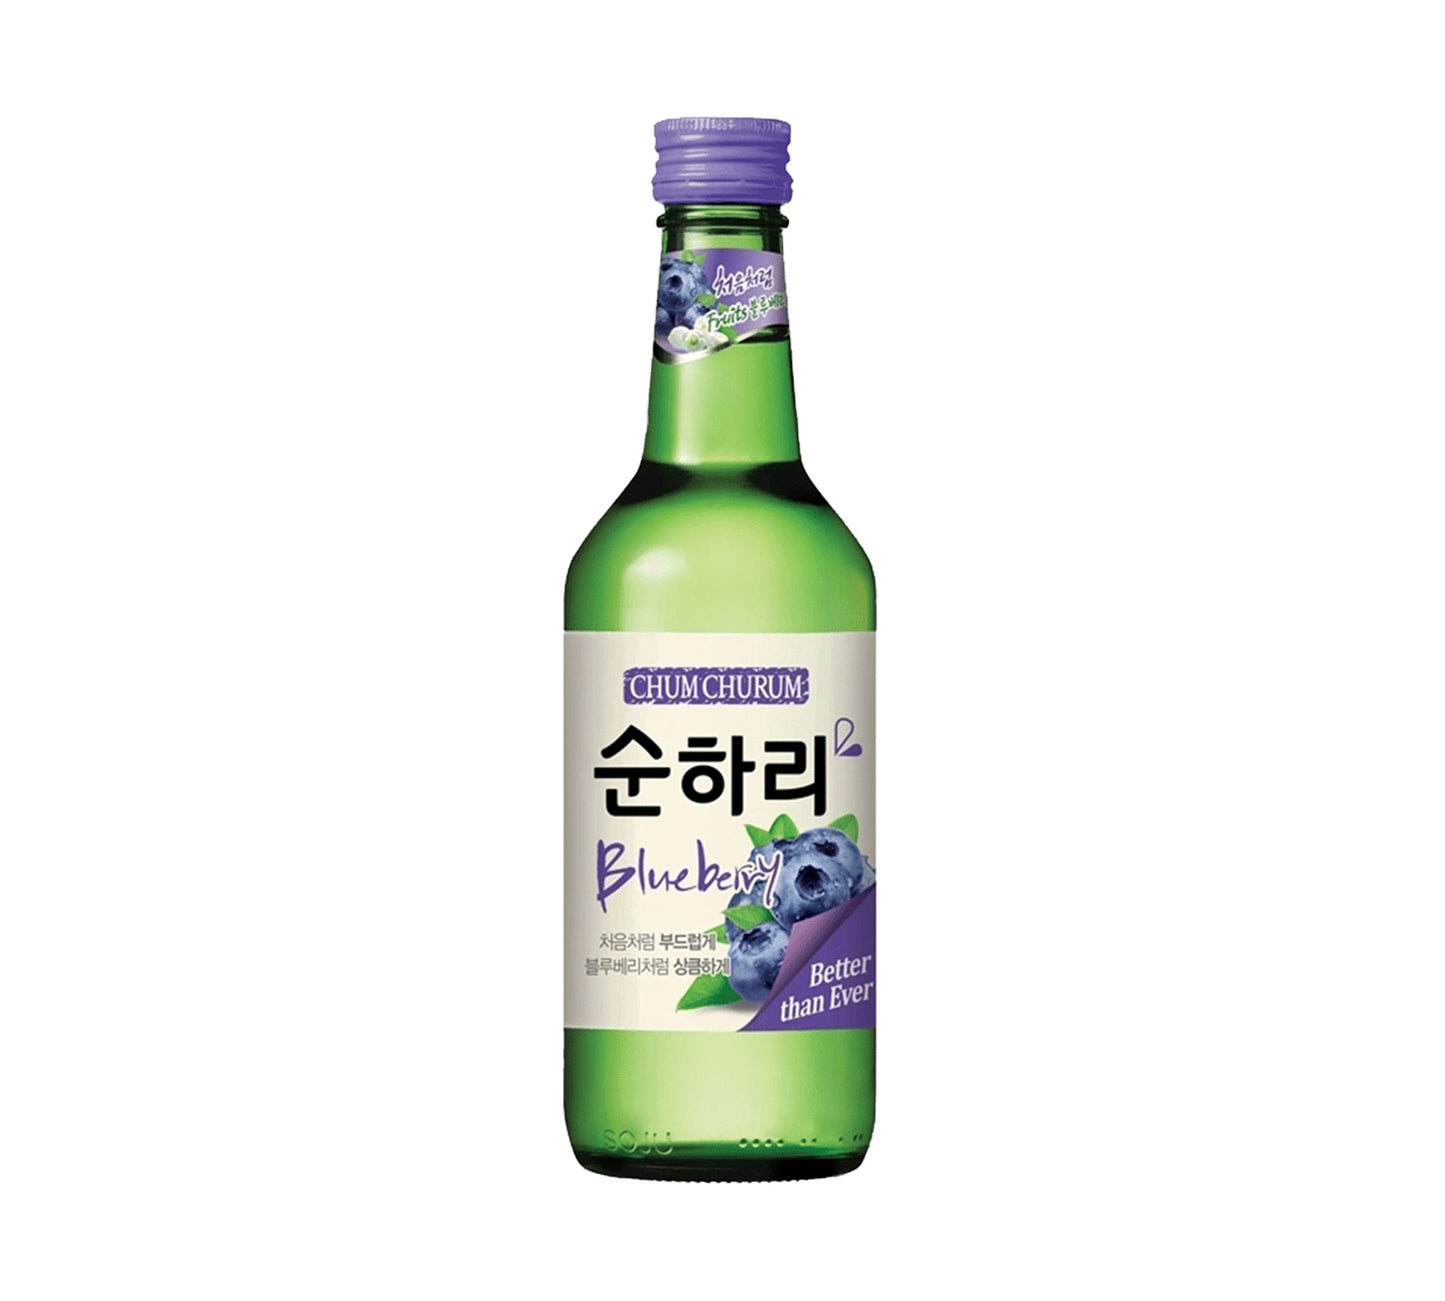 Lotte Chum Churum Soju Blueberry Flavour 12% (360 ml)